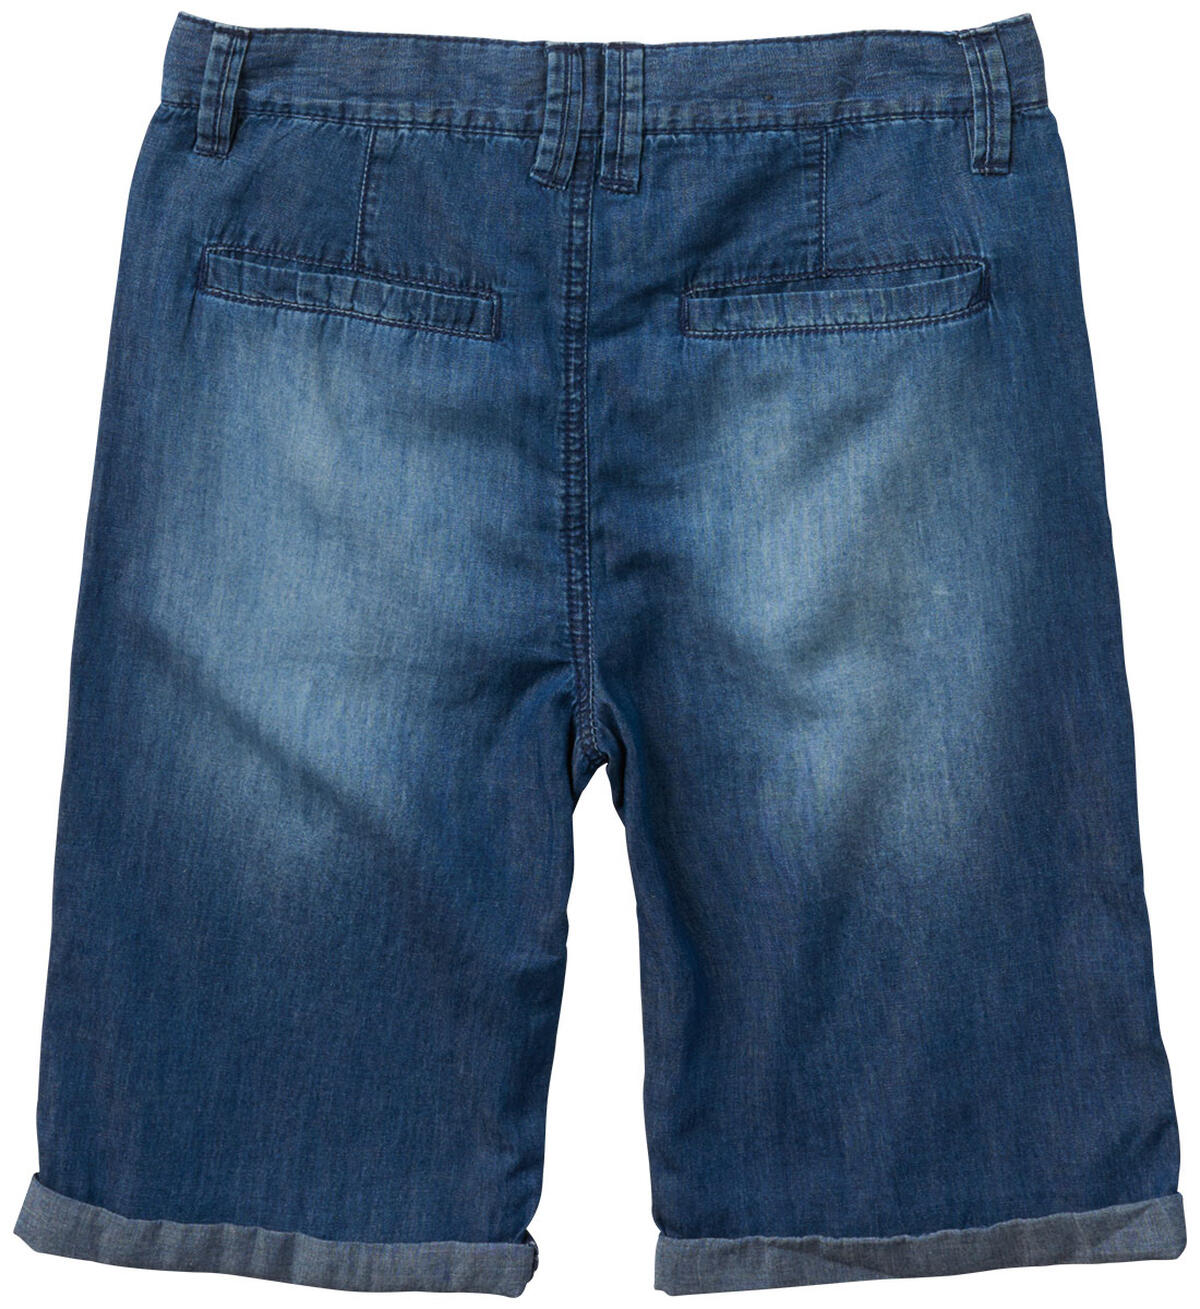 Denim Shorts in Medium Wash (7-16), , hi-res image number 1